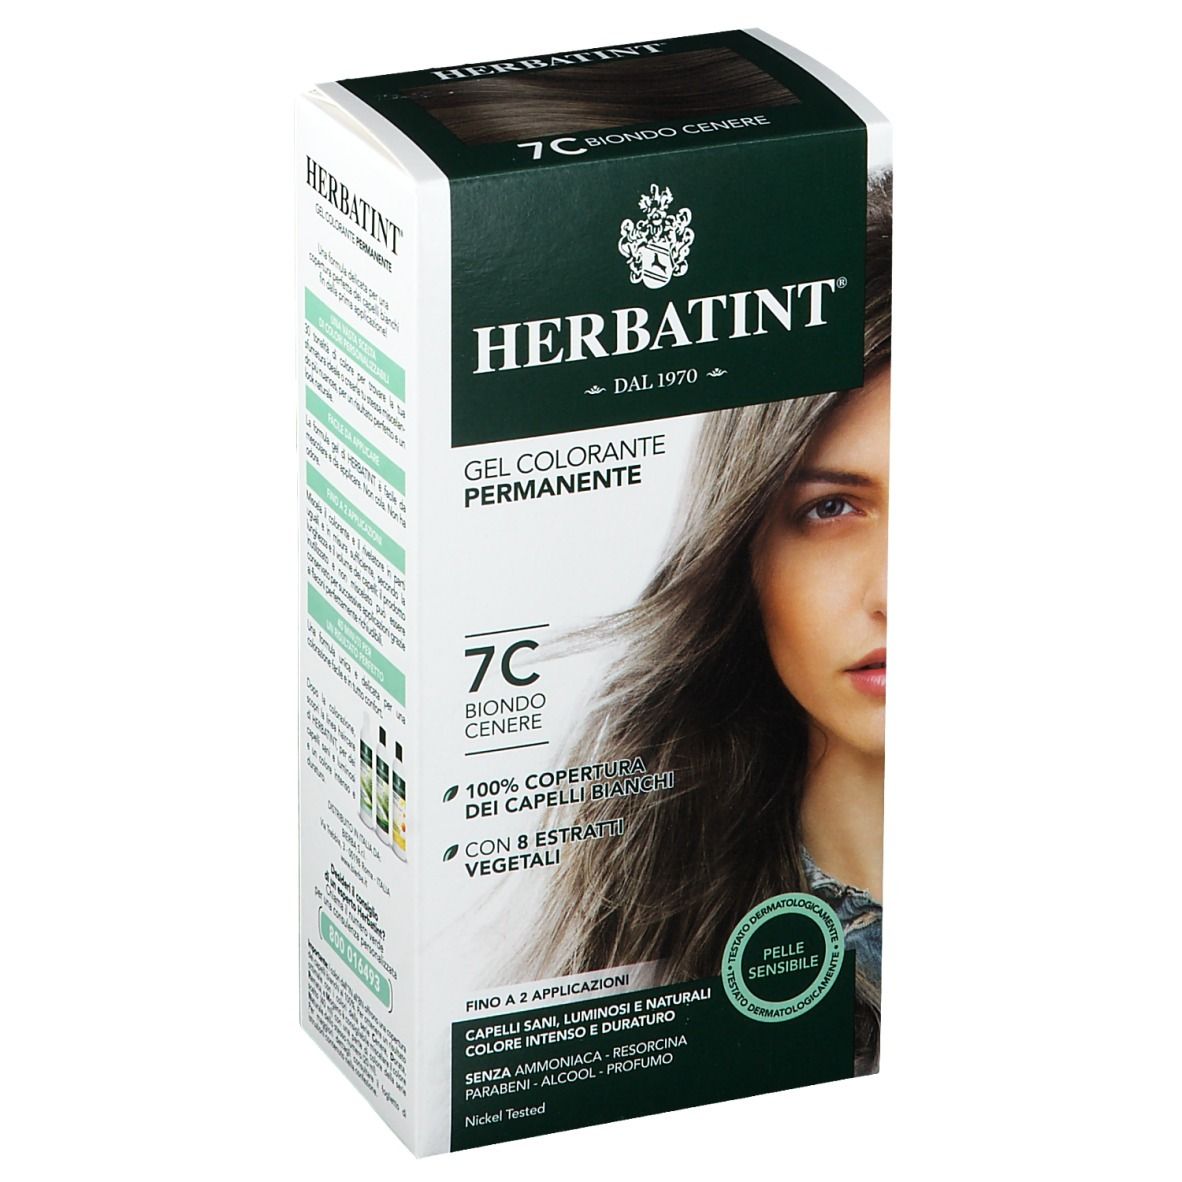 HERBATINT® Haarfarbe Aschblond 7C